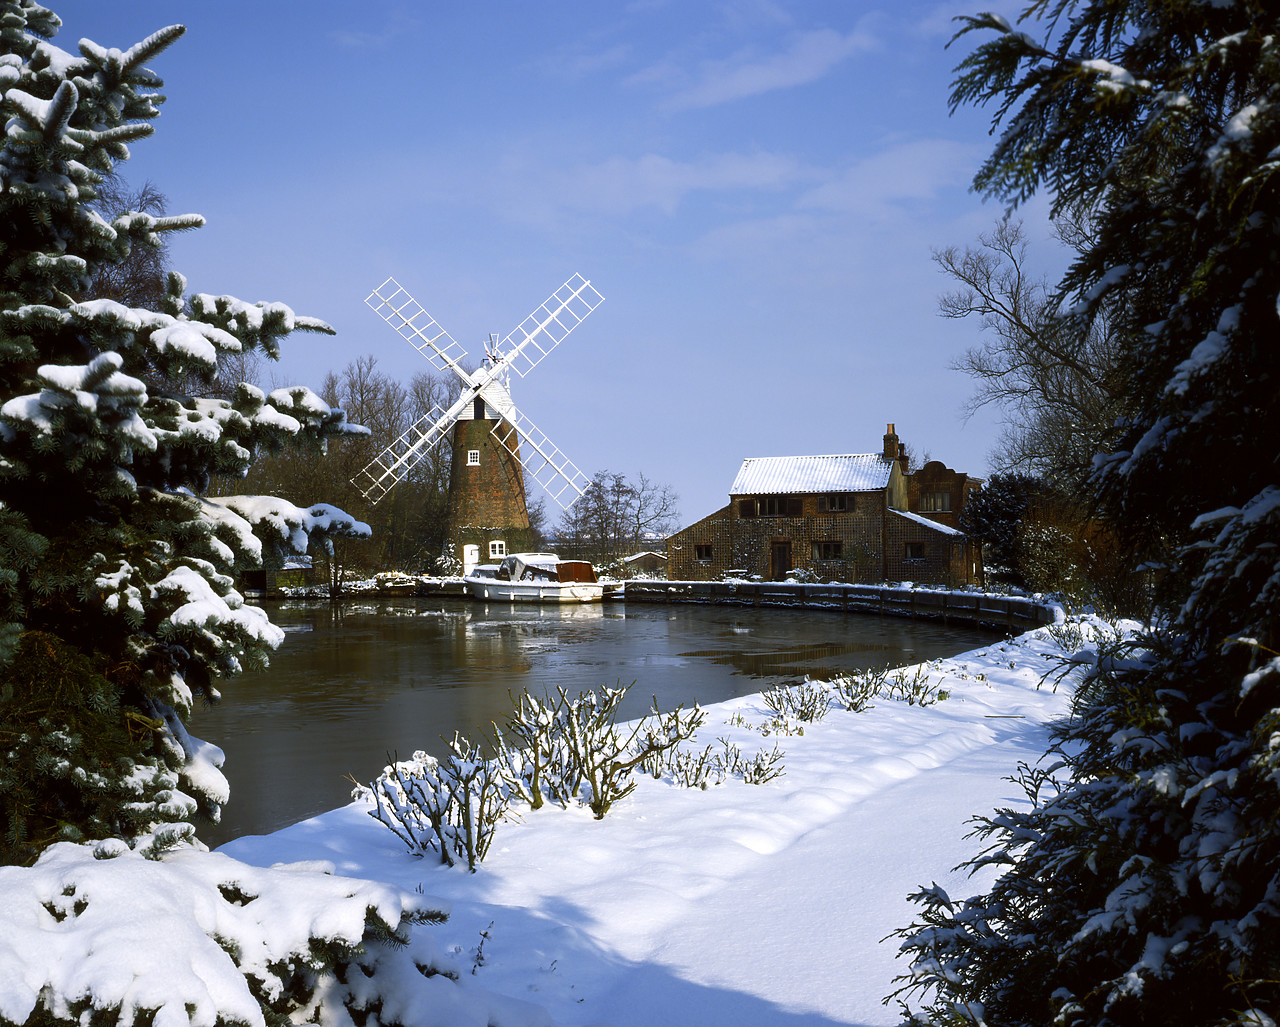 #934500-3 - Hunsett Mill in Winter, Stalham, Norfolk, England